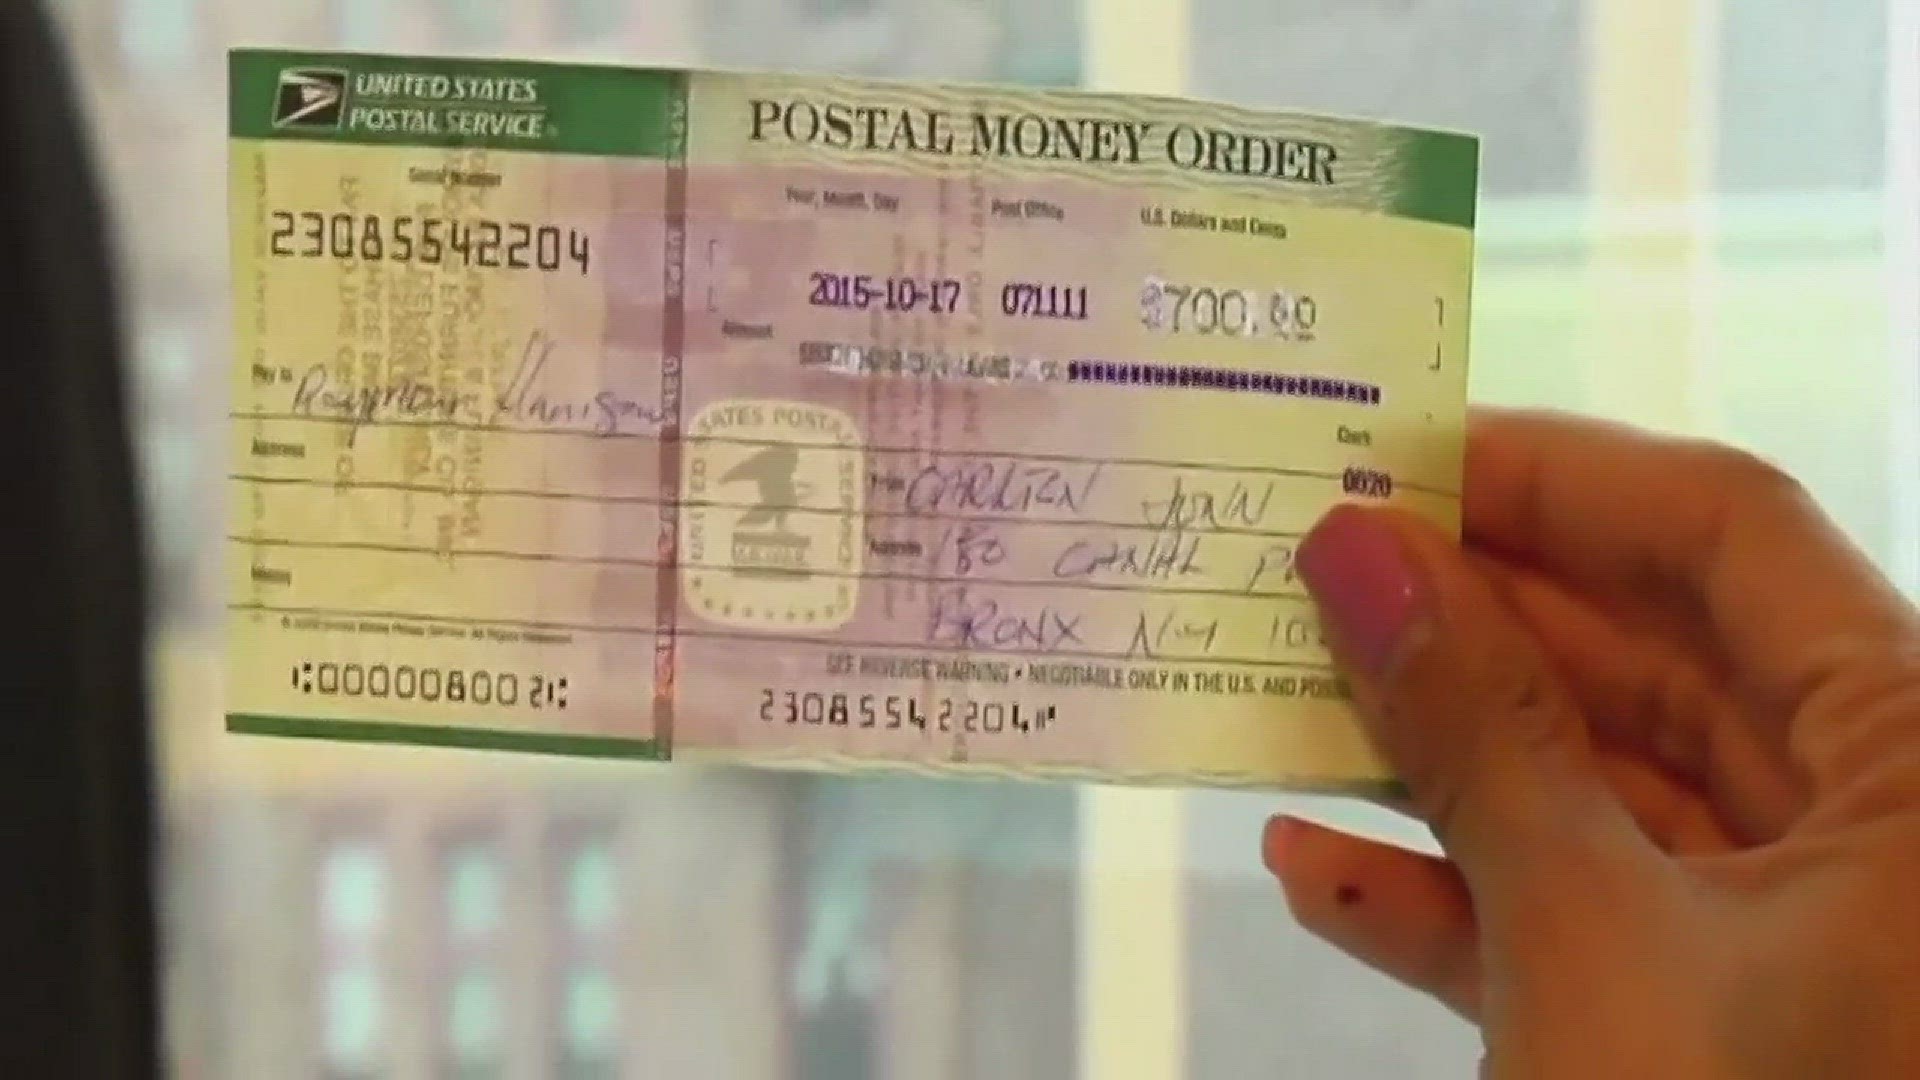 Spot Fake Money Orders Before Depositing Them